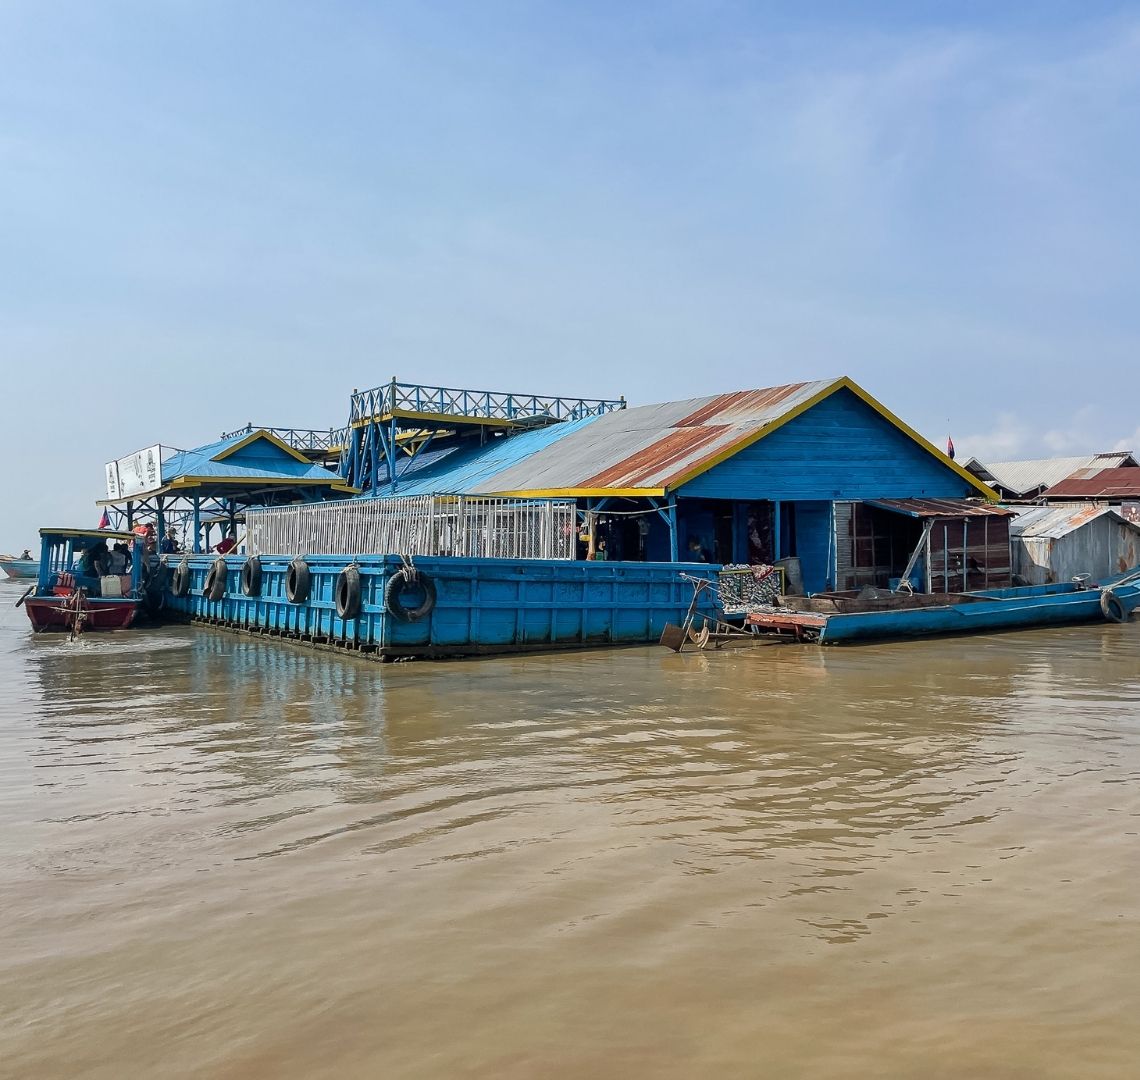 Blue floating building on Tonle Sap lake